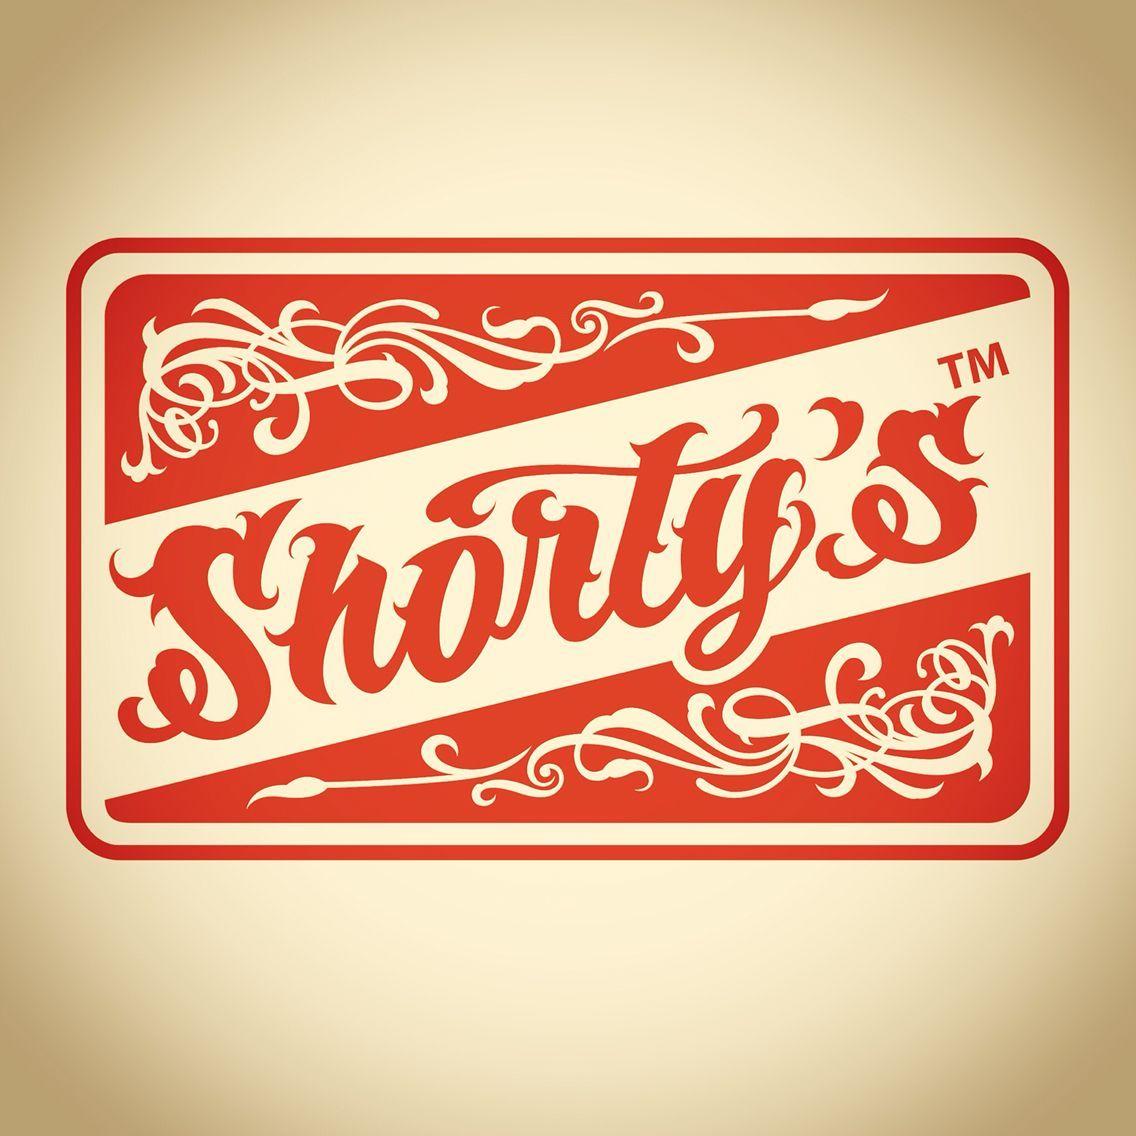 Shorty's Logo - New 